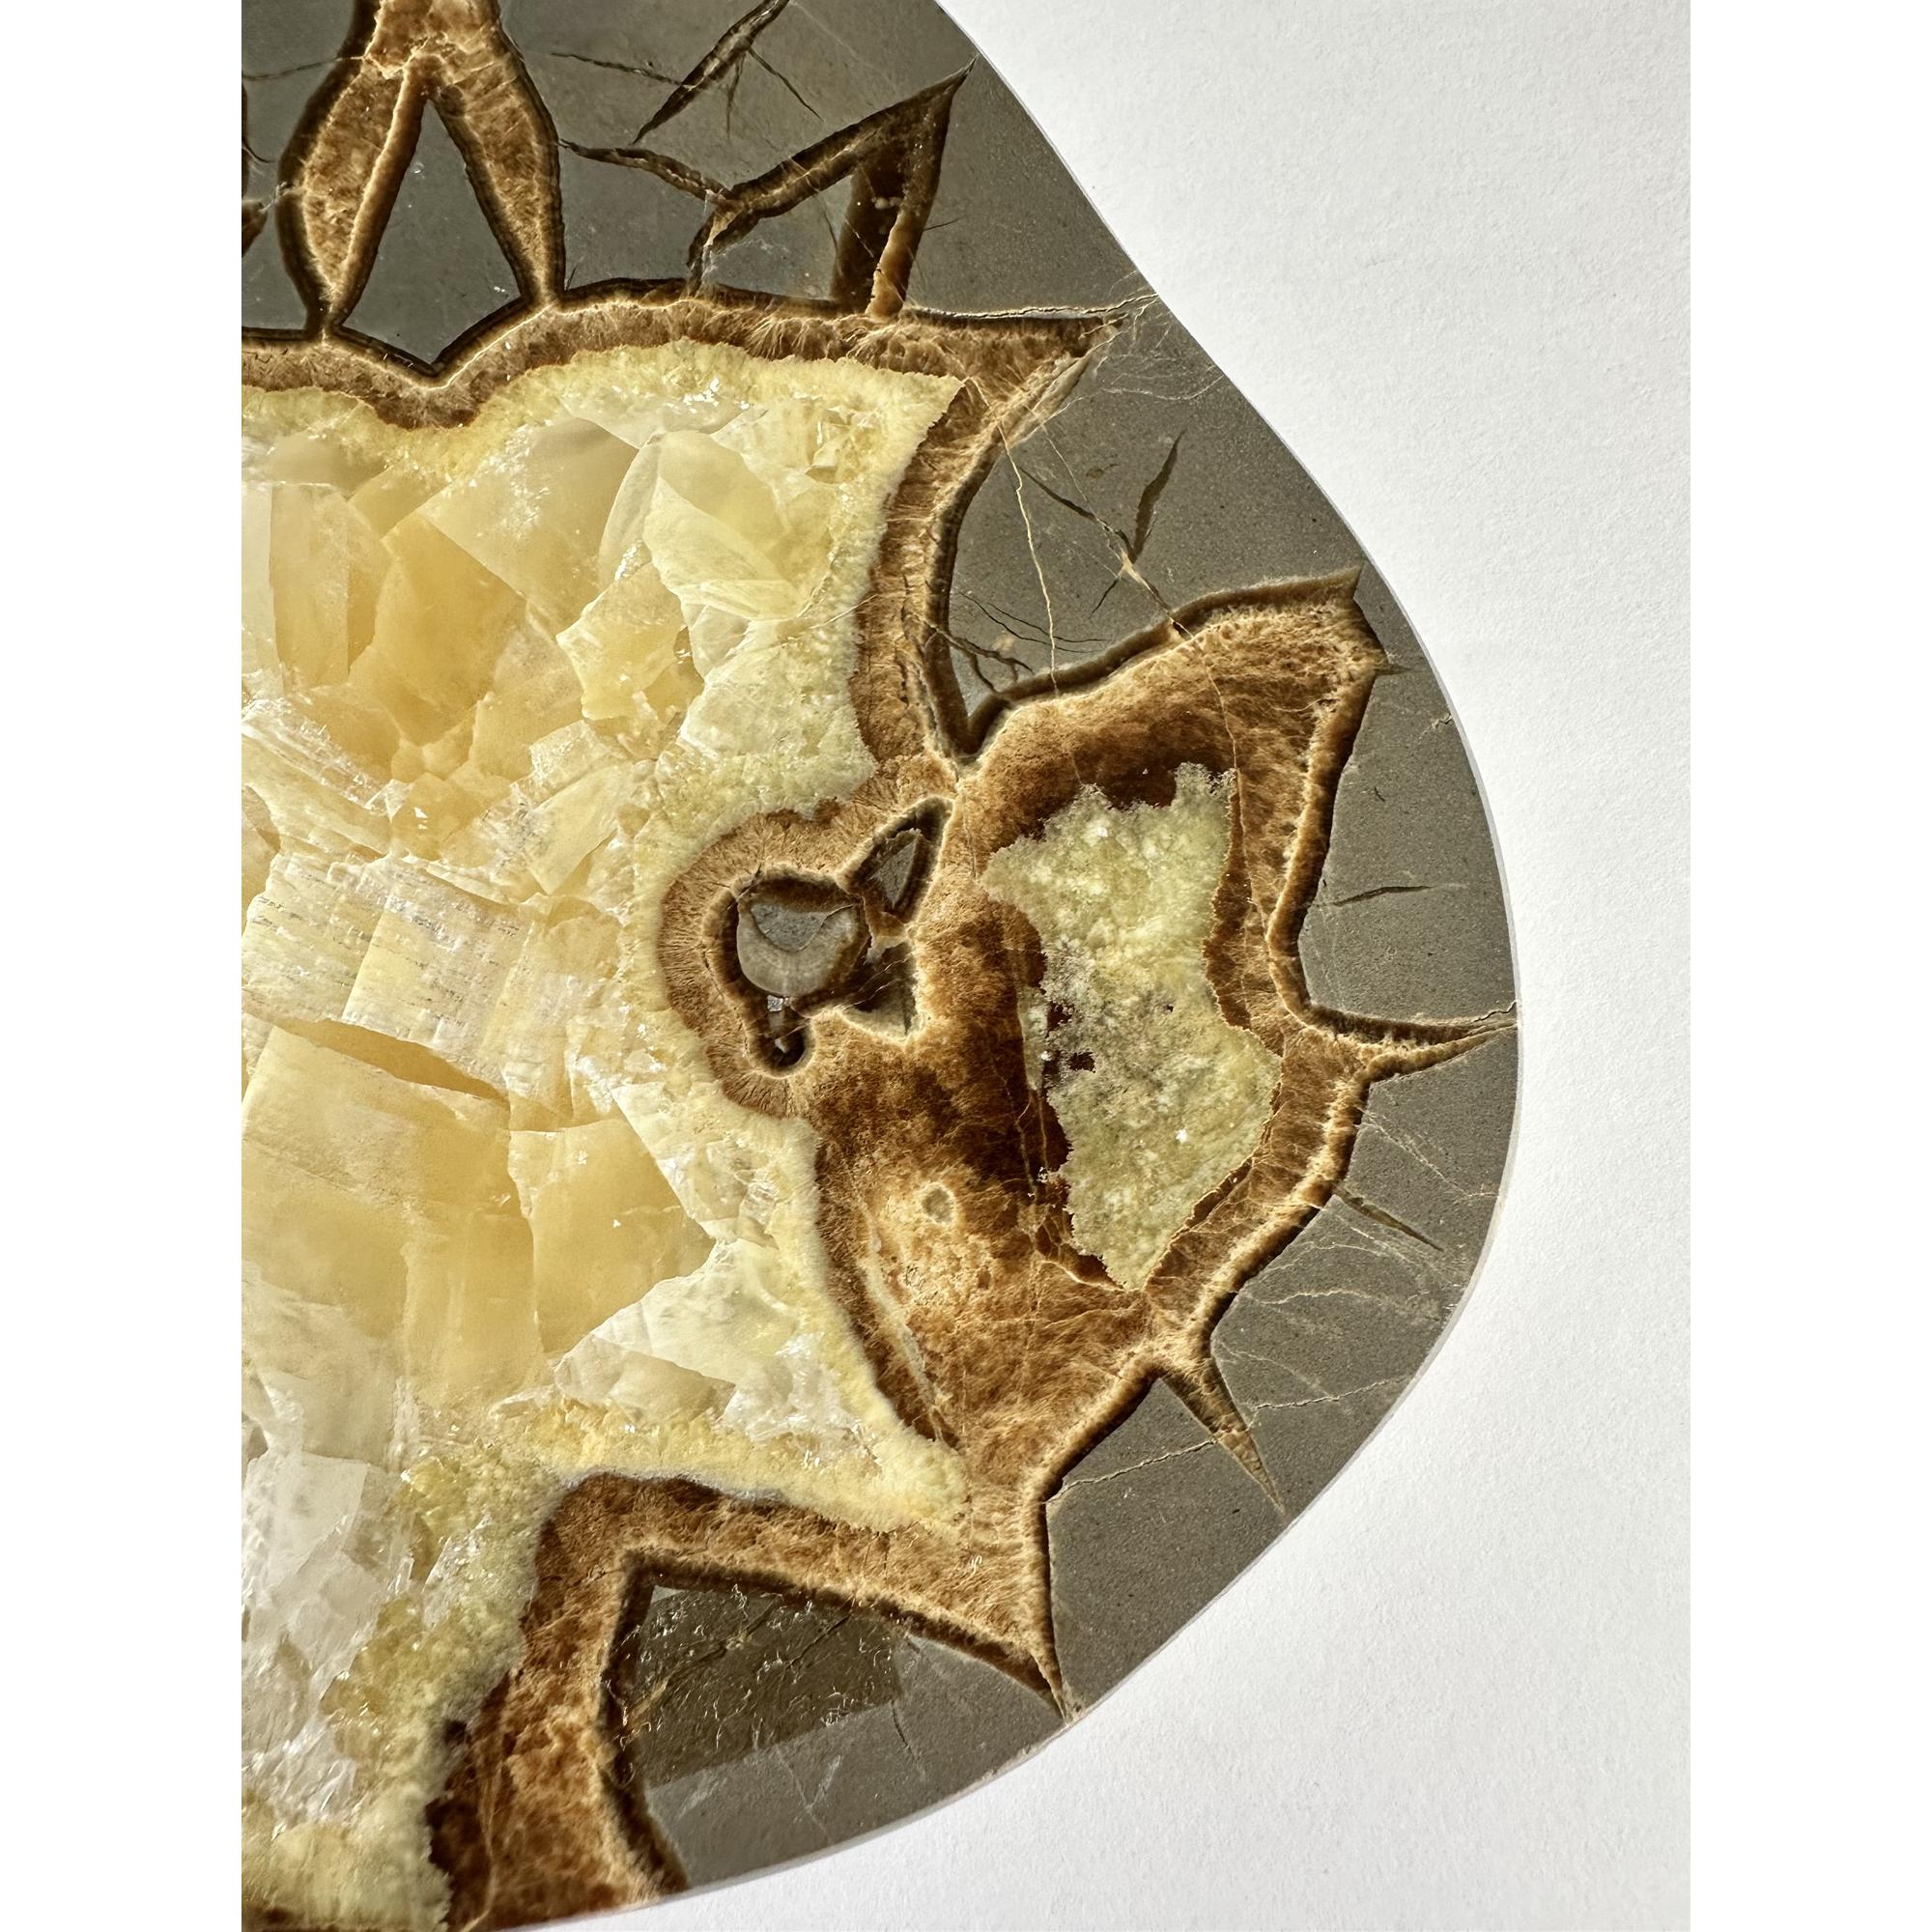 Septarian slice, 6 3/4 inch, Utah Prehistoric Online